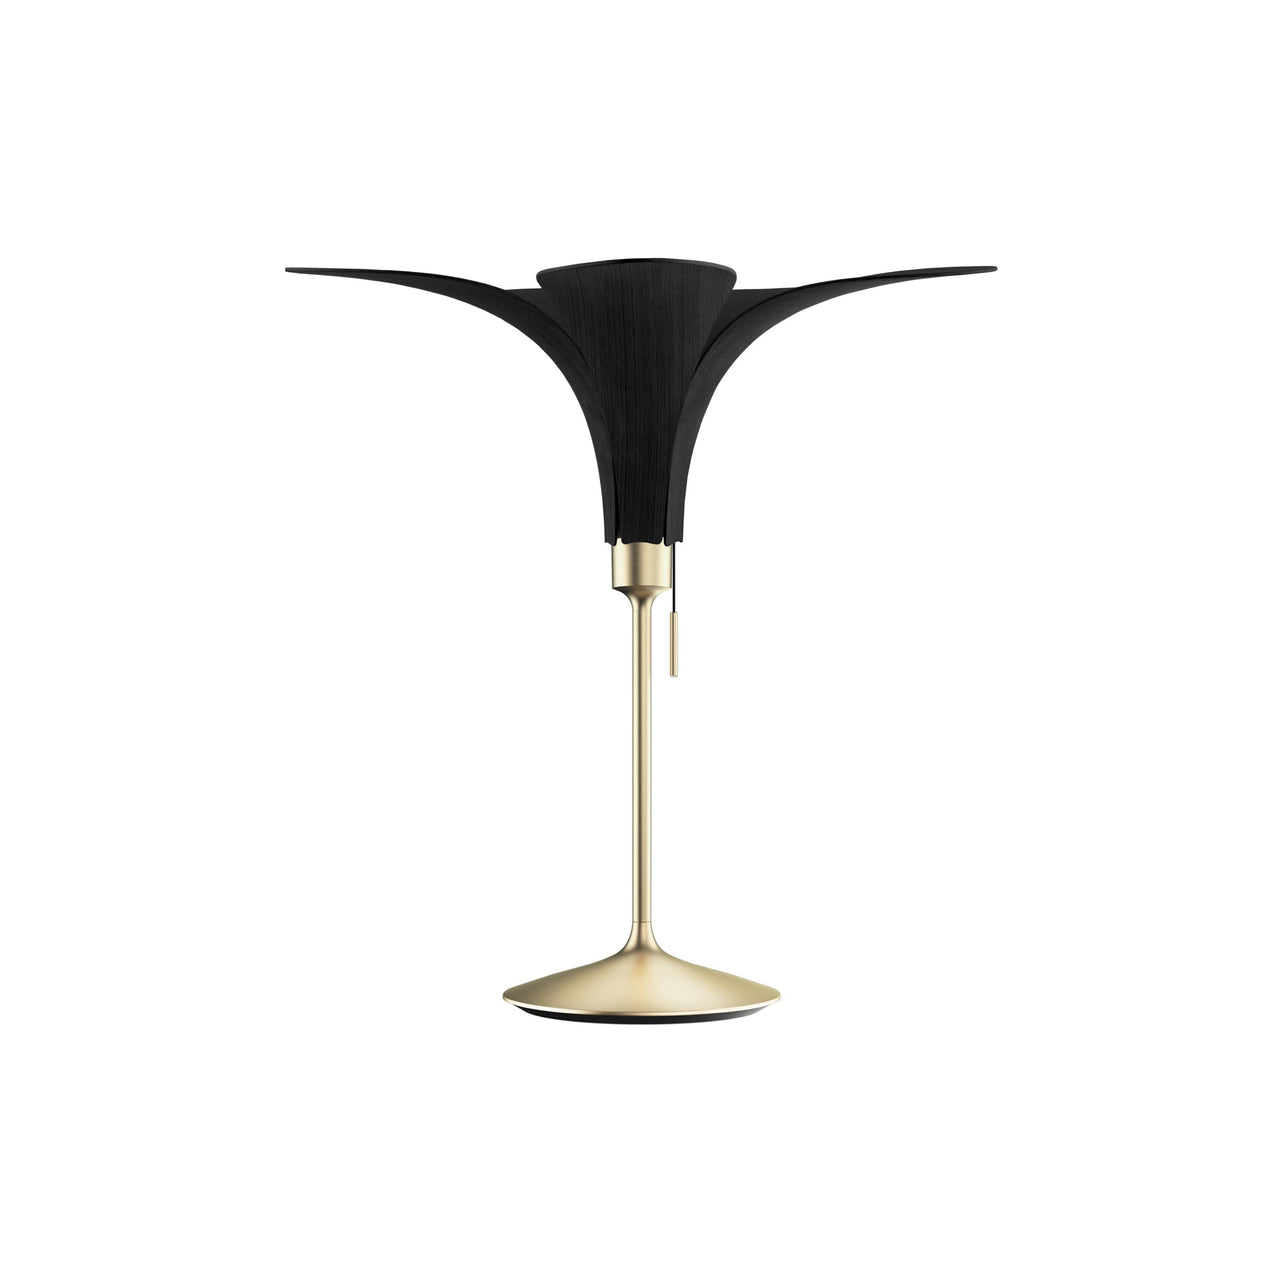 Jazz Champagne Table Lamp: Black Oak + Brushed Brass